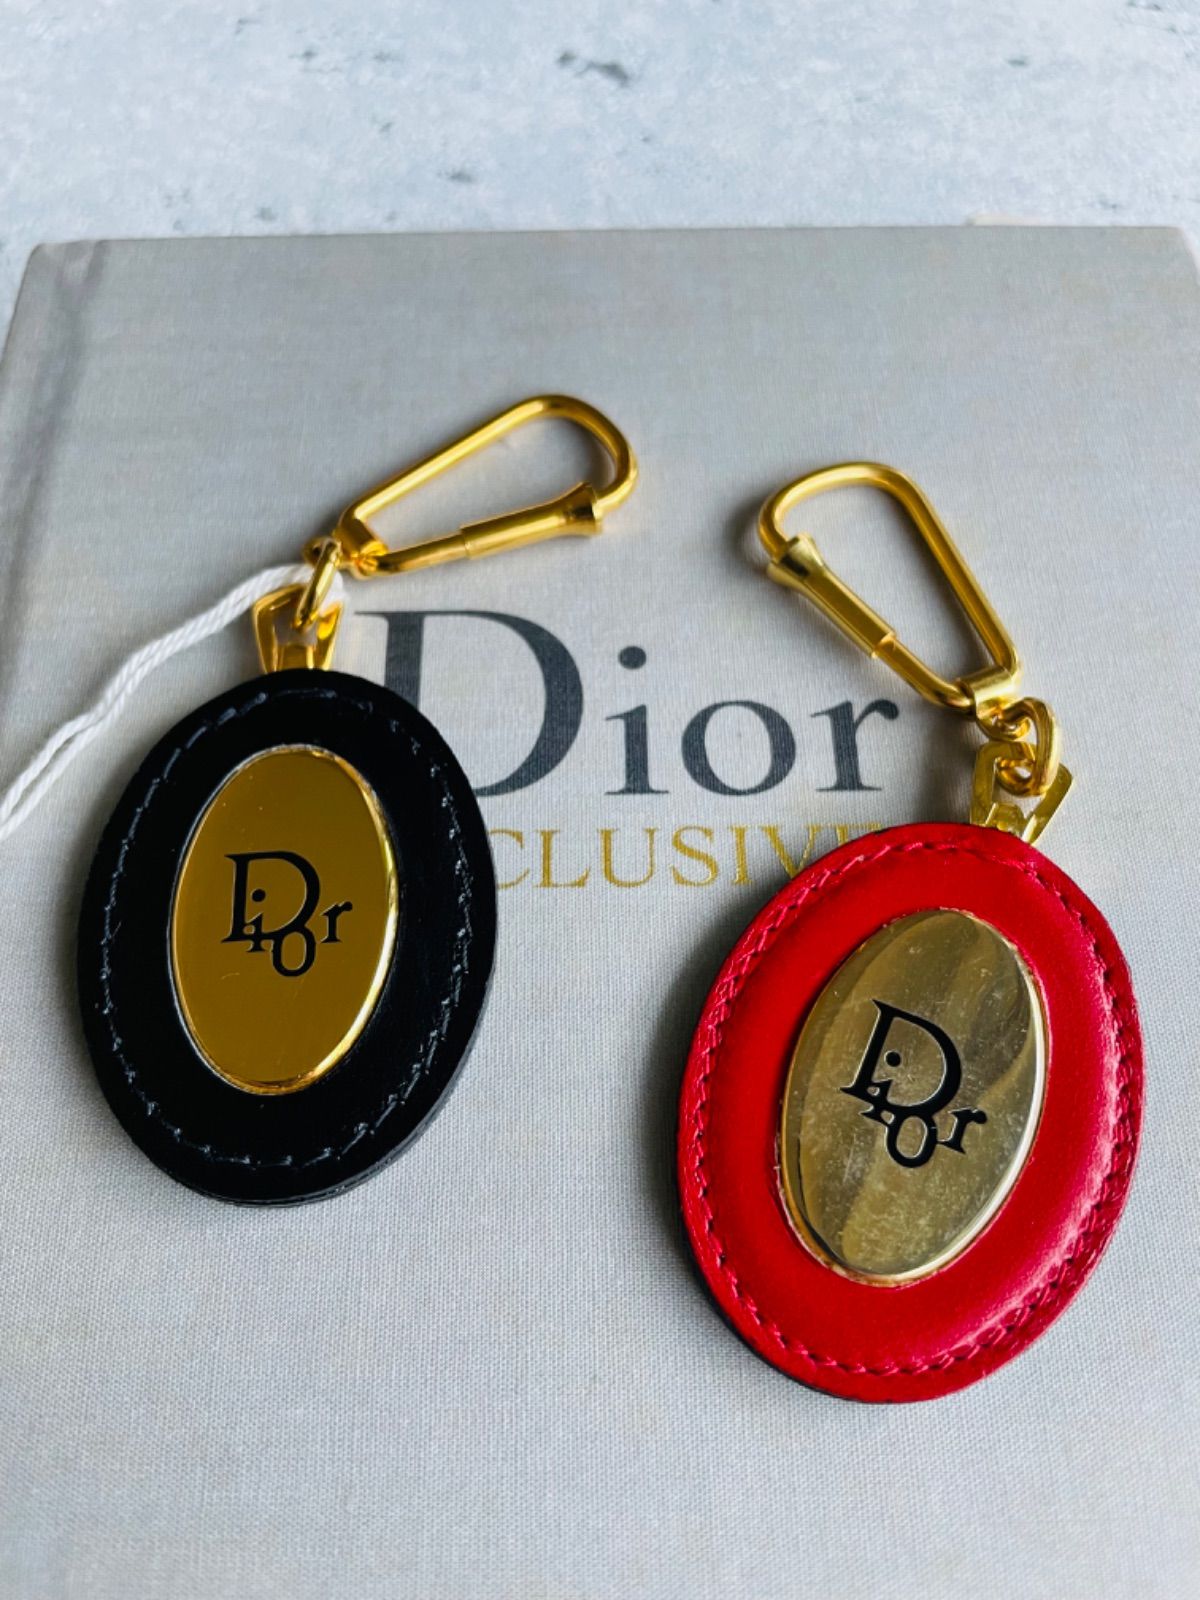 Christian Dior ラウンドプレート キーリング クリスチャンディオール 